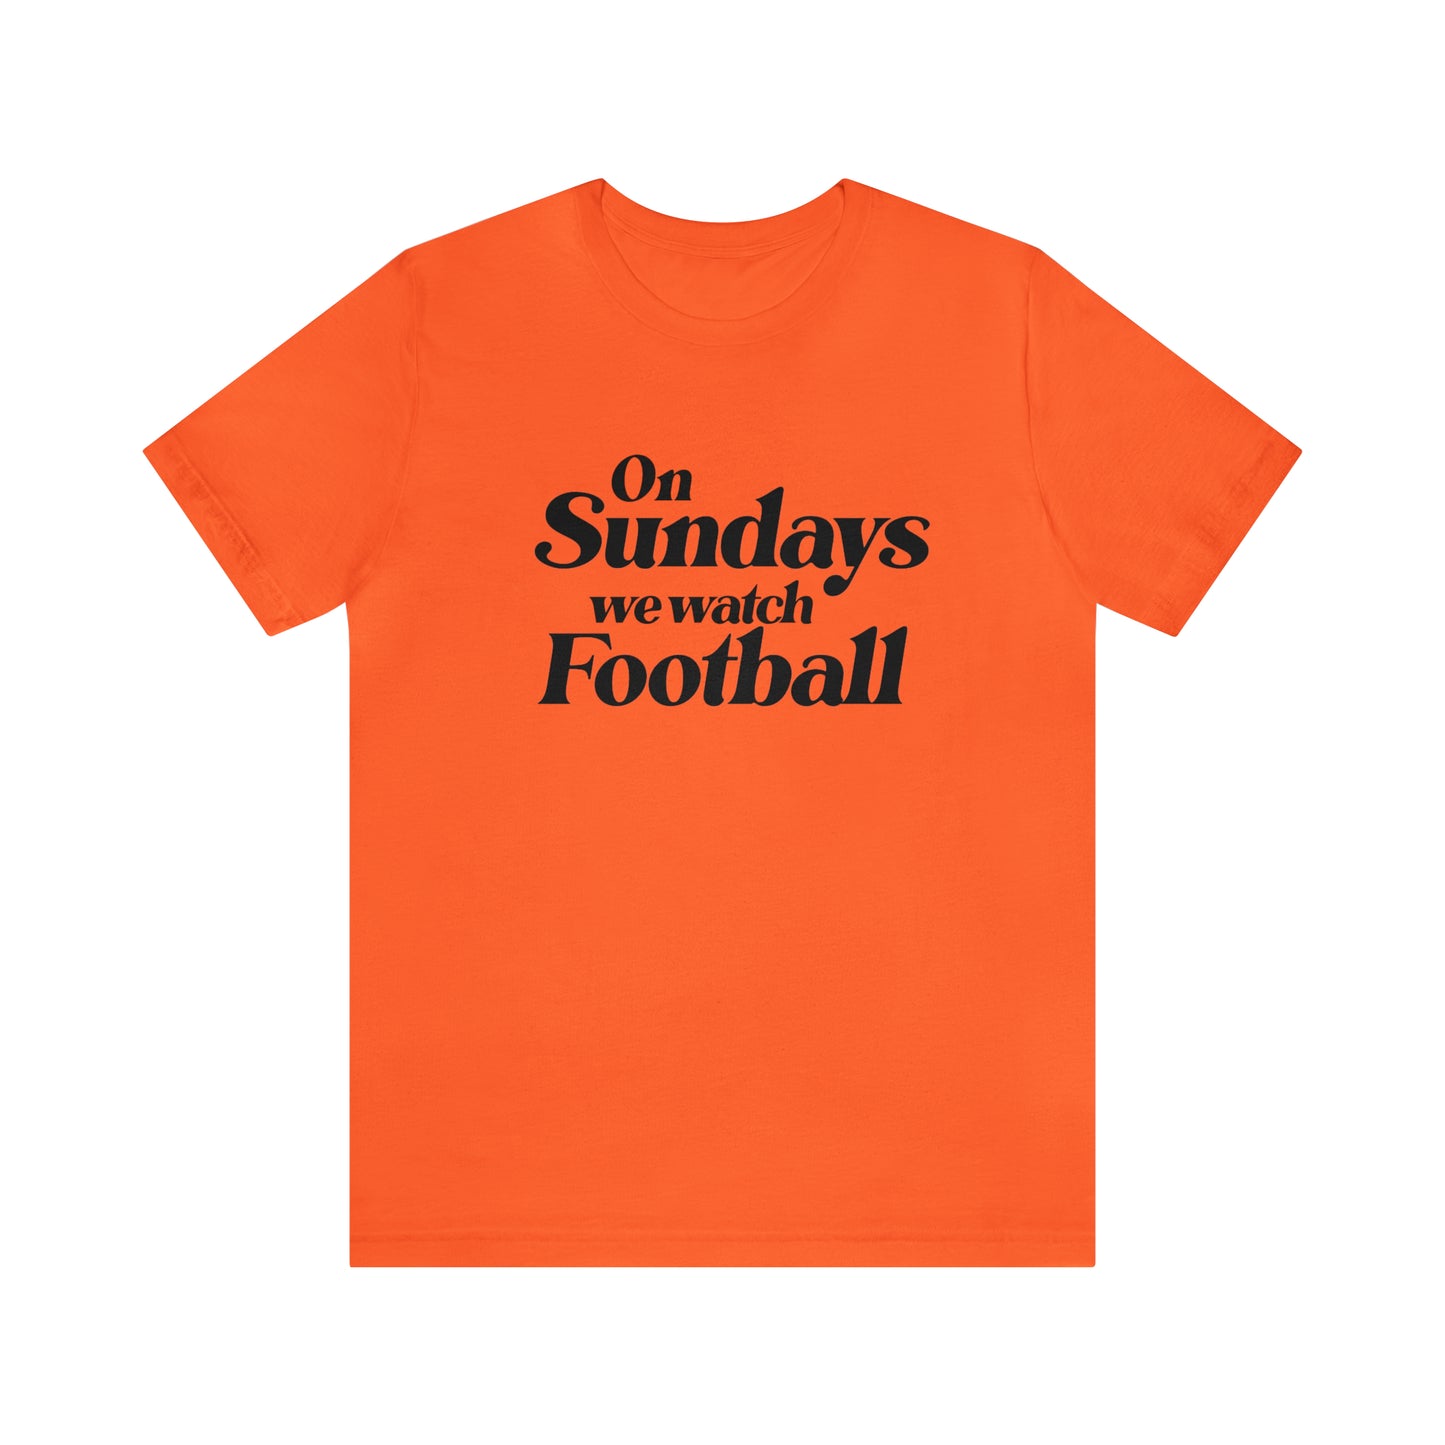 On Sundays we watch Football - Unisex T-shirt